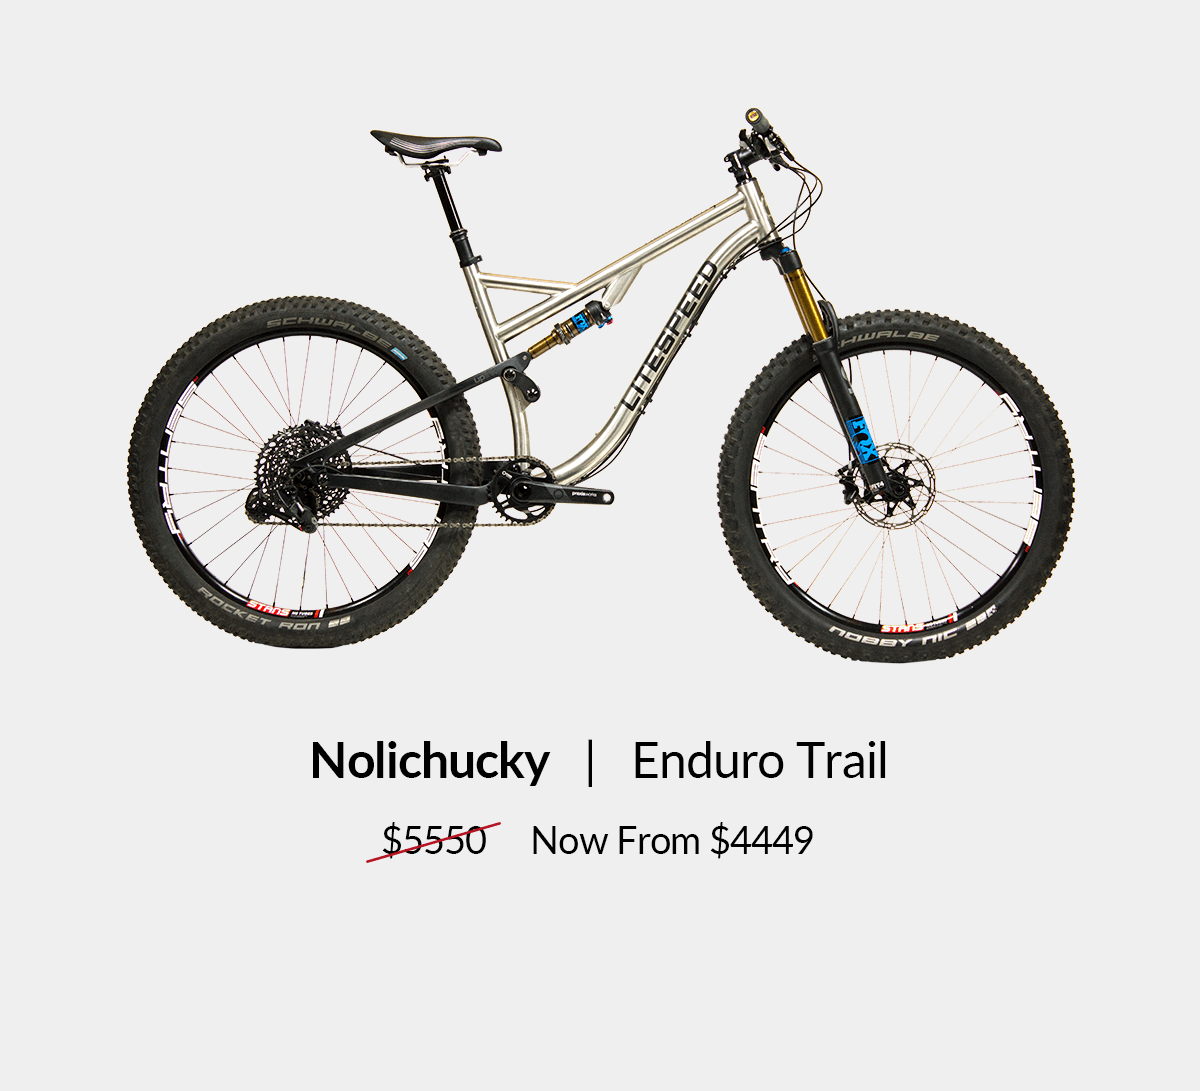 Nolichucky: Enduro trail bike from $4449. Shop now!